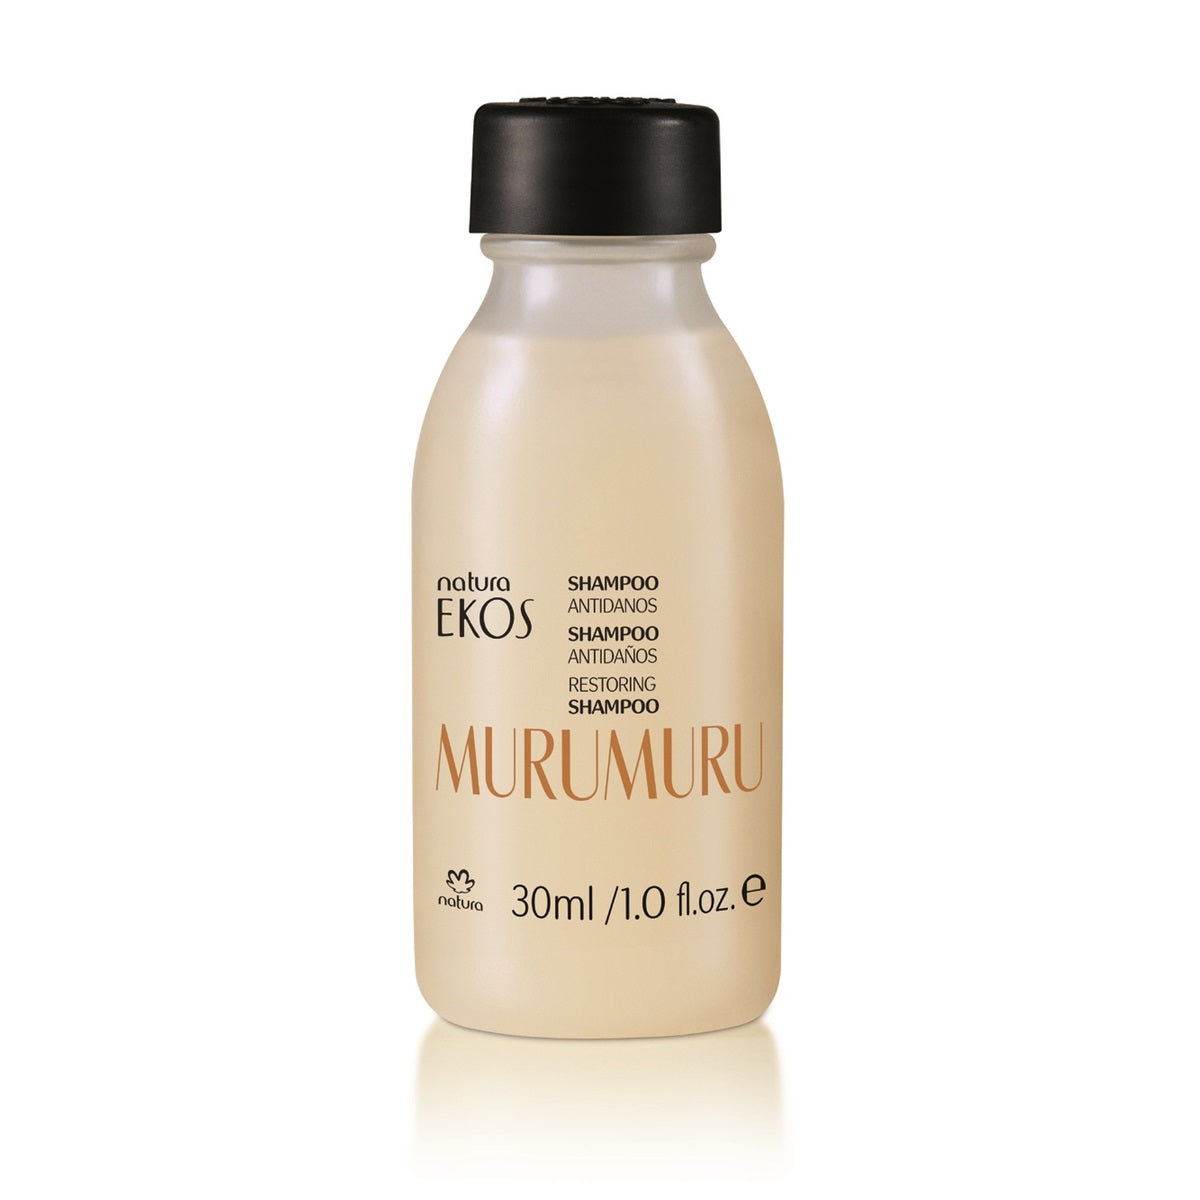 Mini Murumuru Anti-Damage Shampoo 30ml